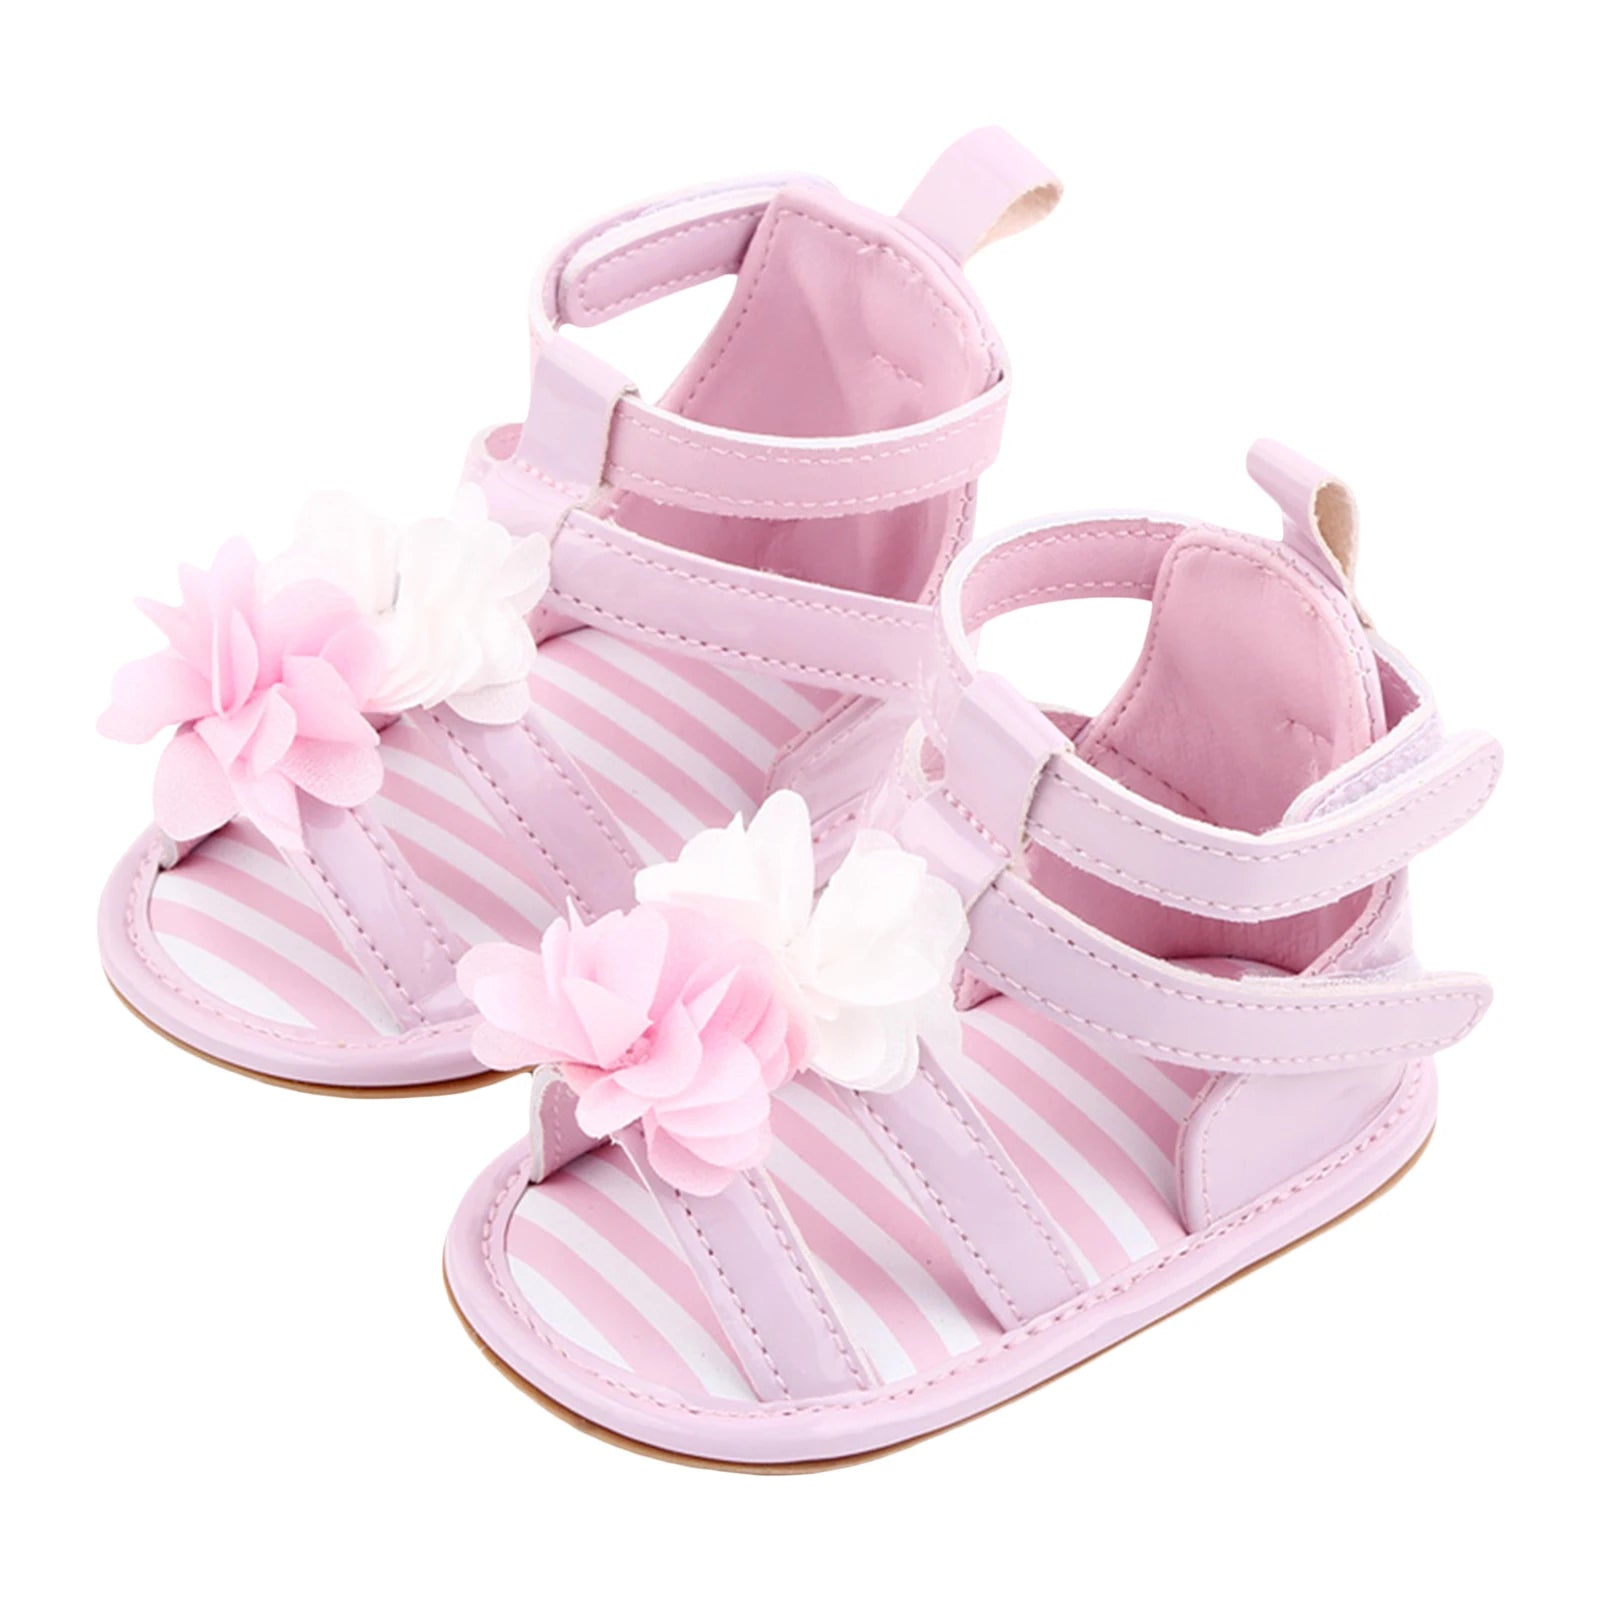 FlowerHigh Baby Girl Sandals - Pink